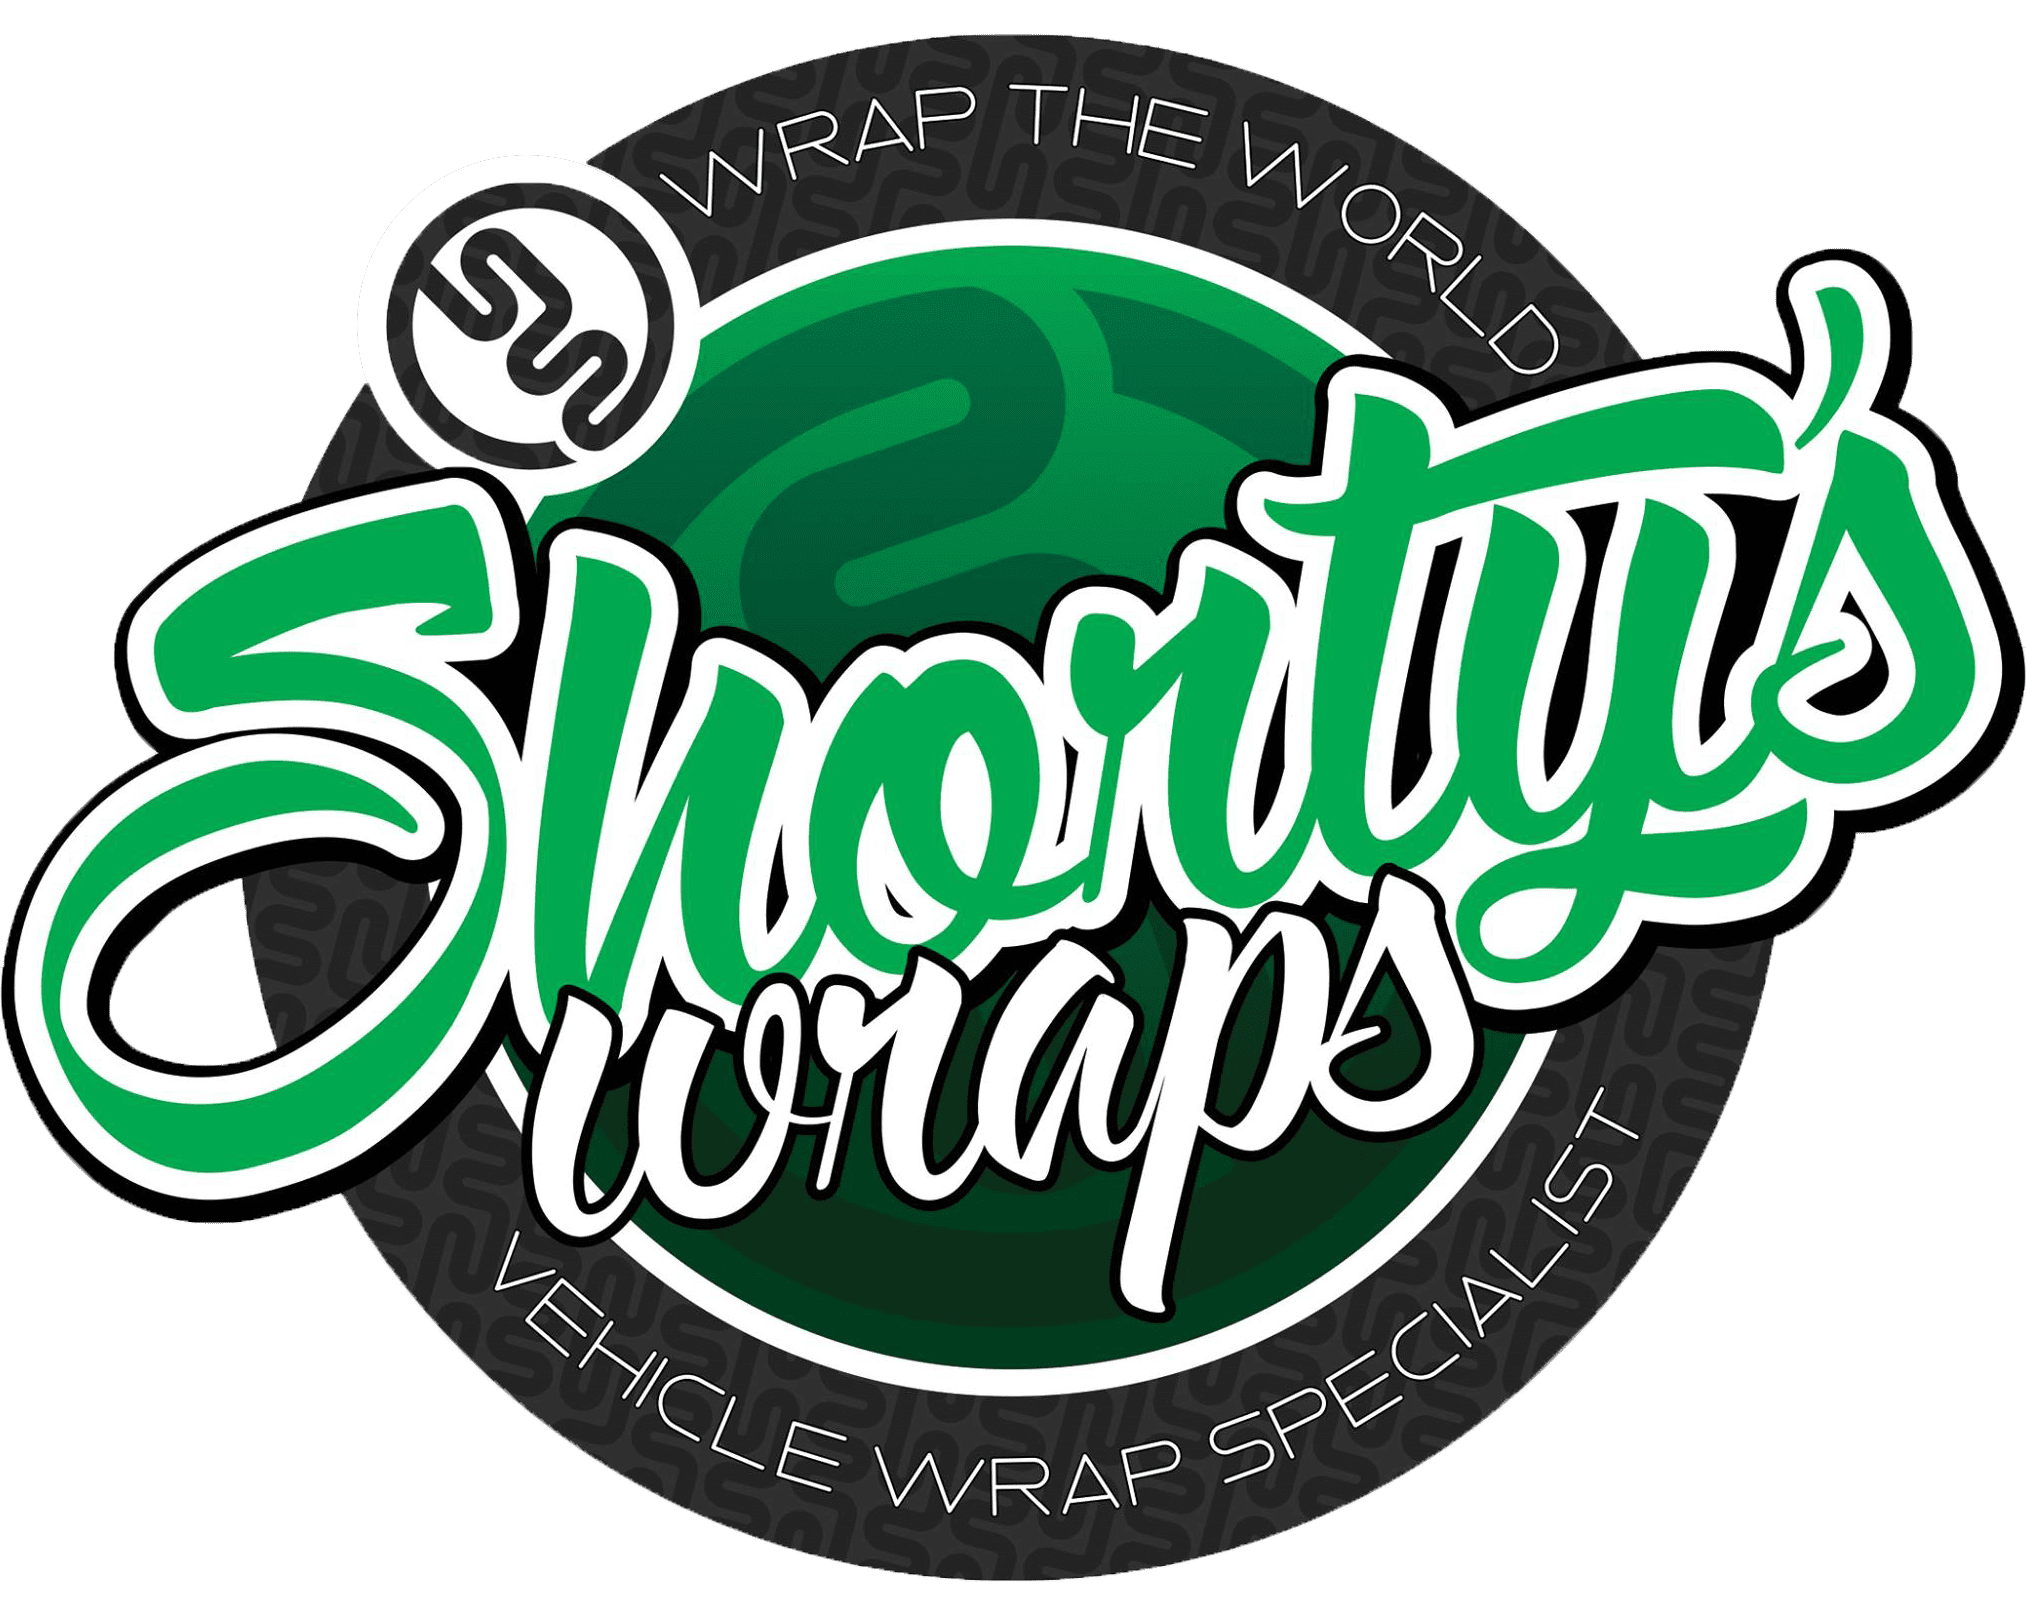 Shoty's Wraps logo